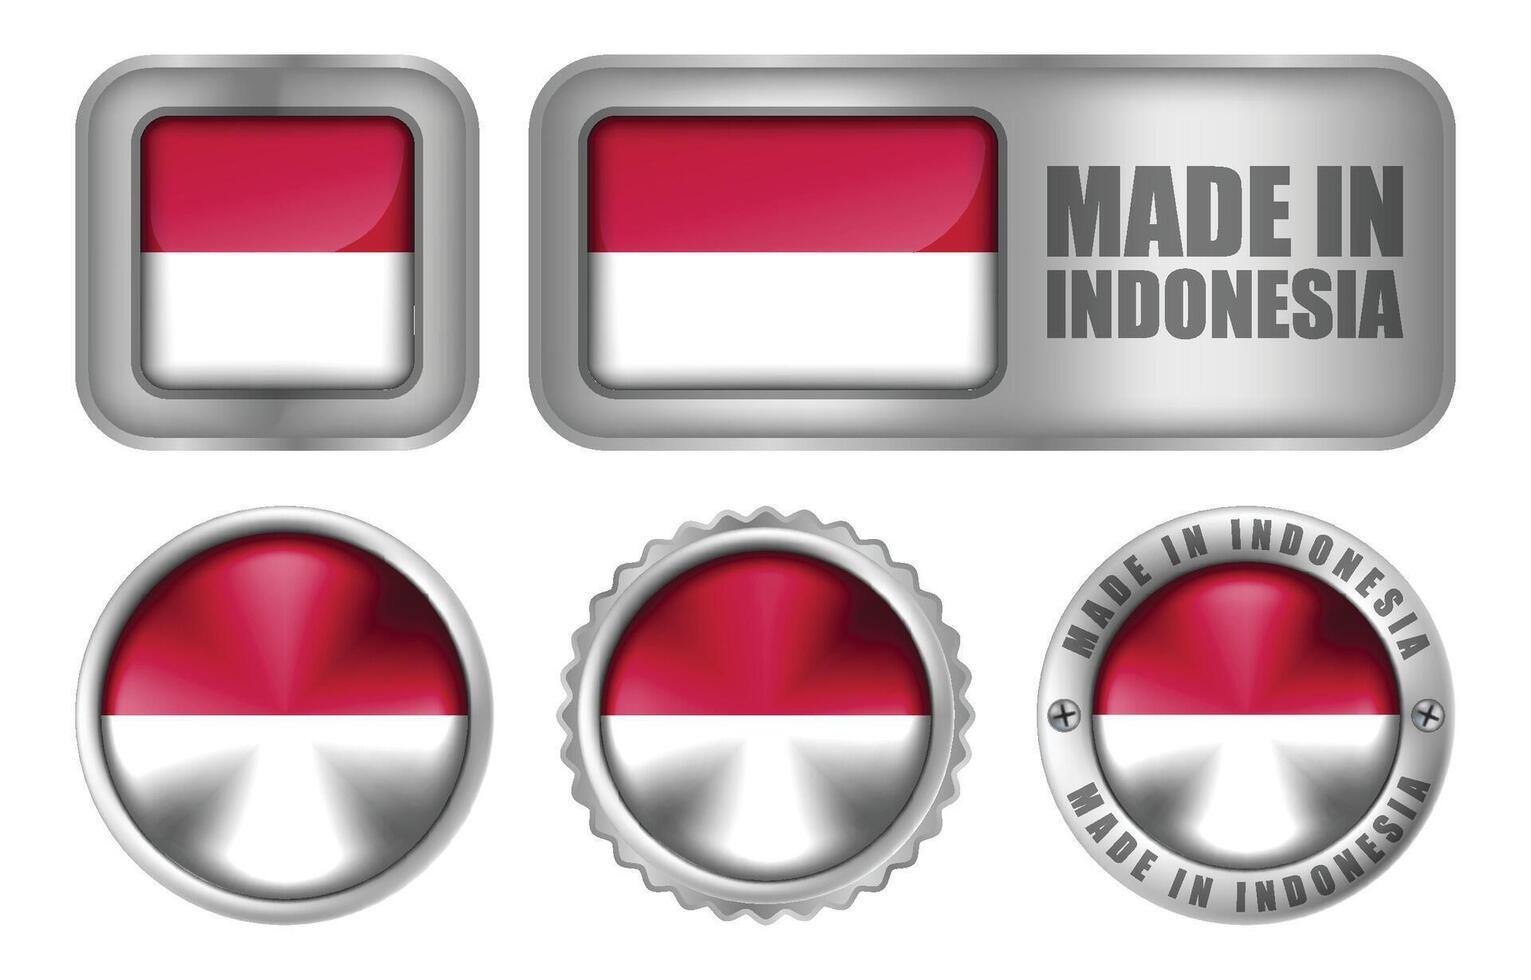 Made in Indonesia Seal Badge or Sticker Design illustration vector